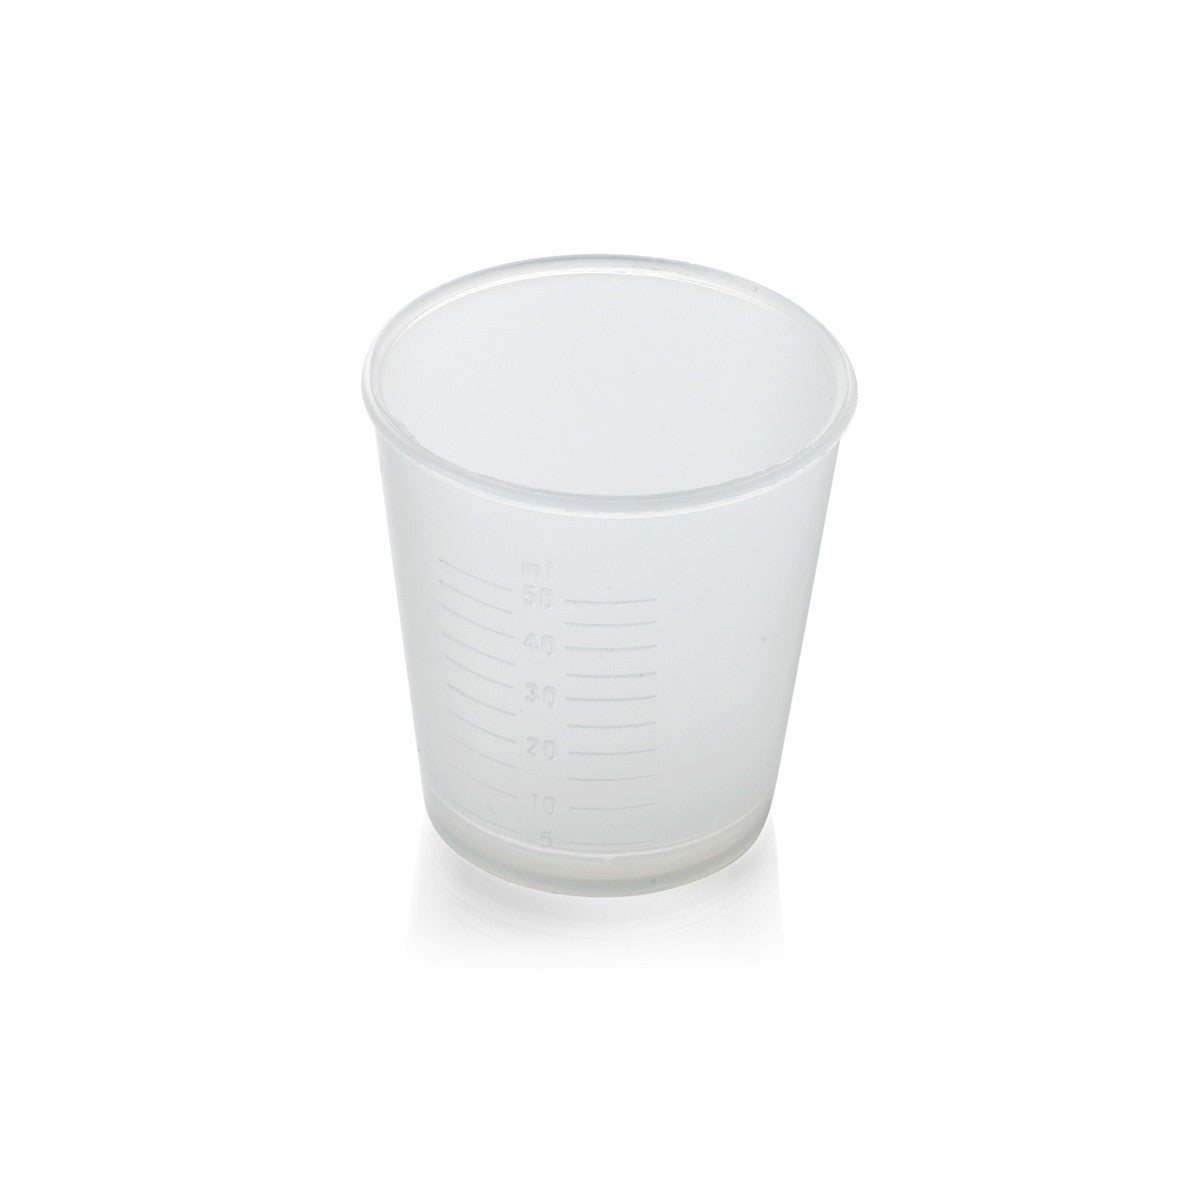 Measuring cup 50ml - Plastic